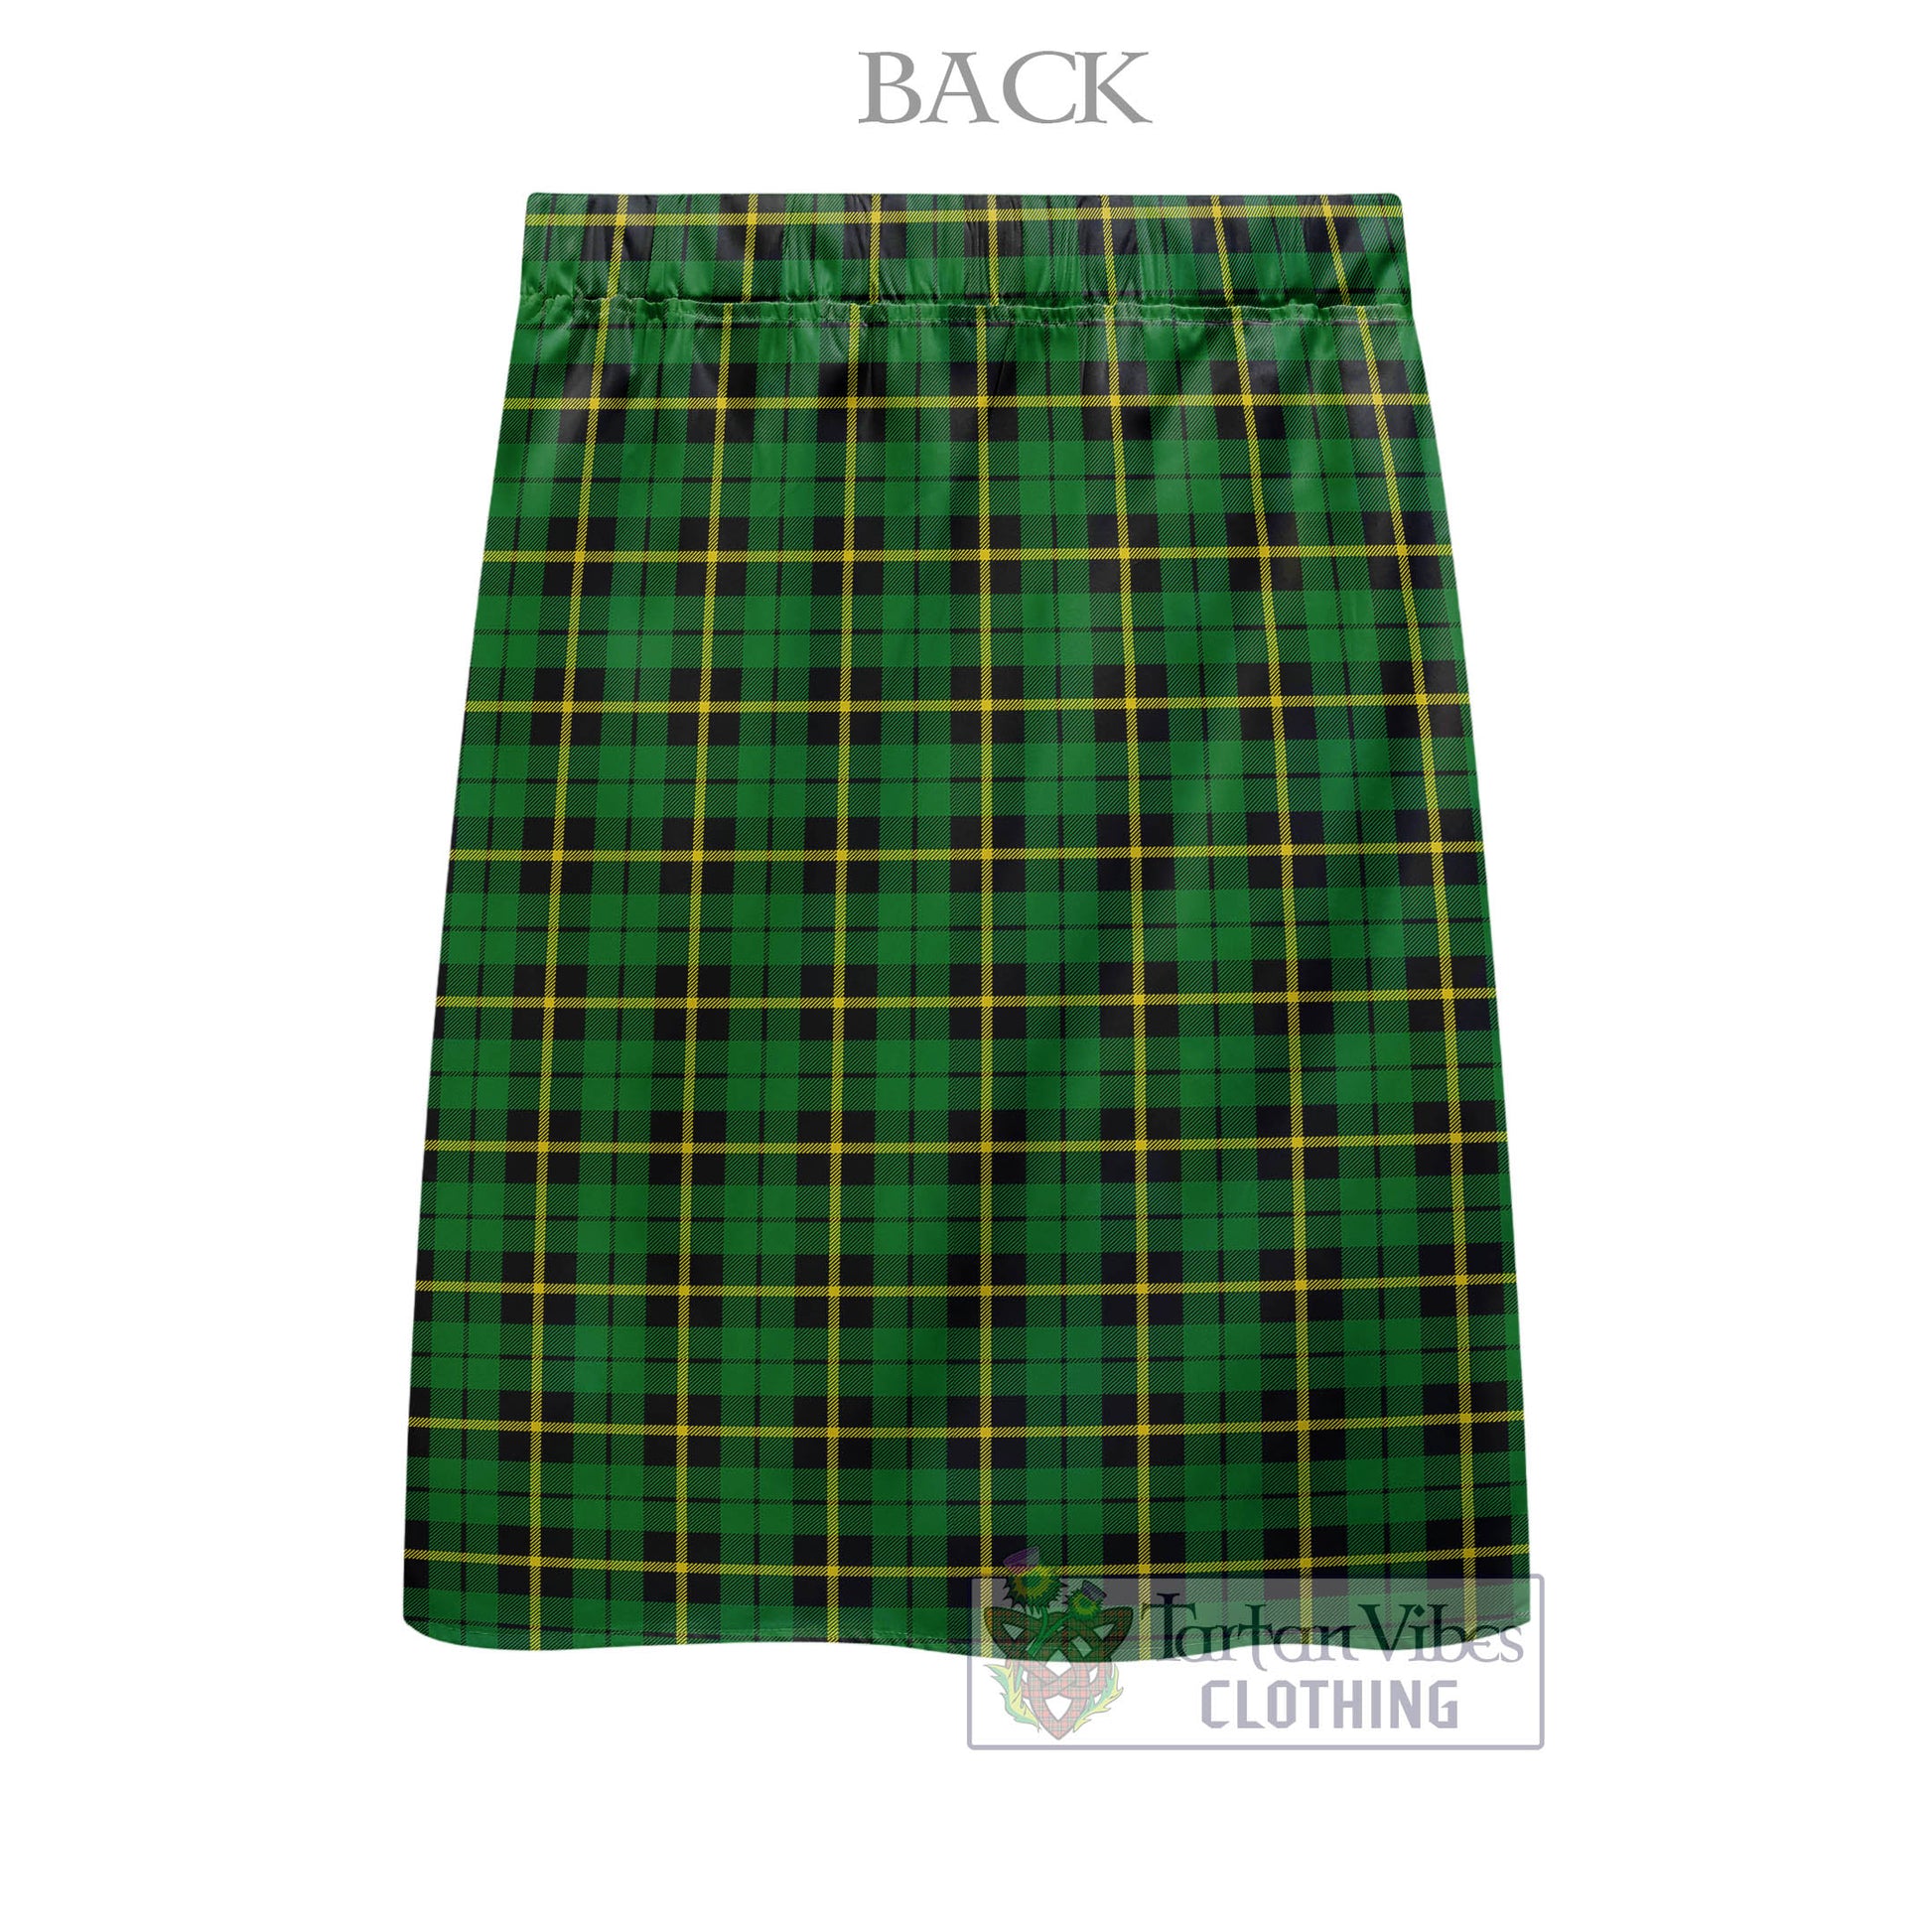 Tartan Vibes Clothing Wallace Hunting Green Tartan Men's Pleated Skirt - Fashion Casual Retro Scottish Style